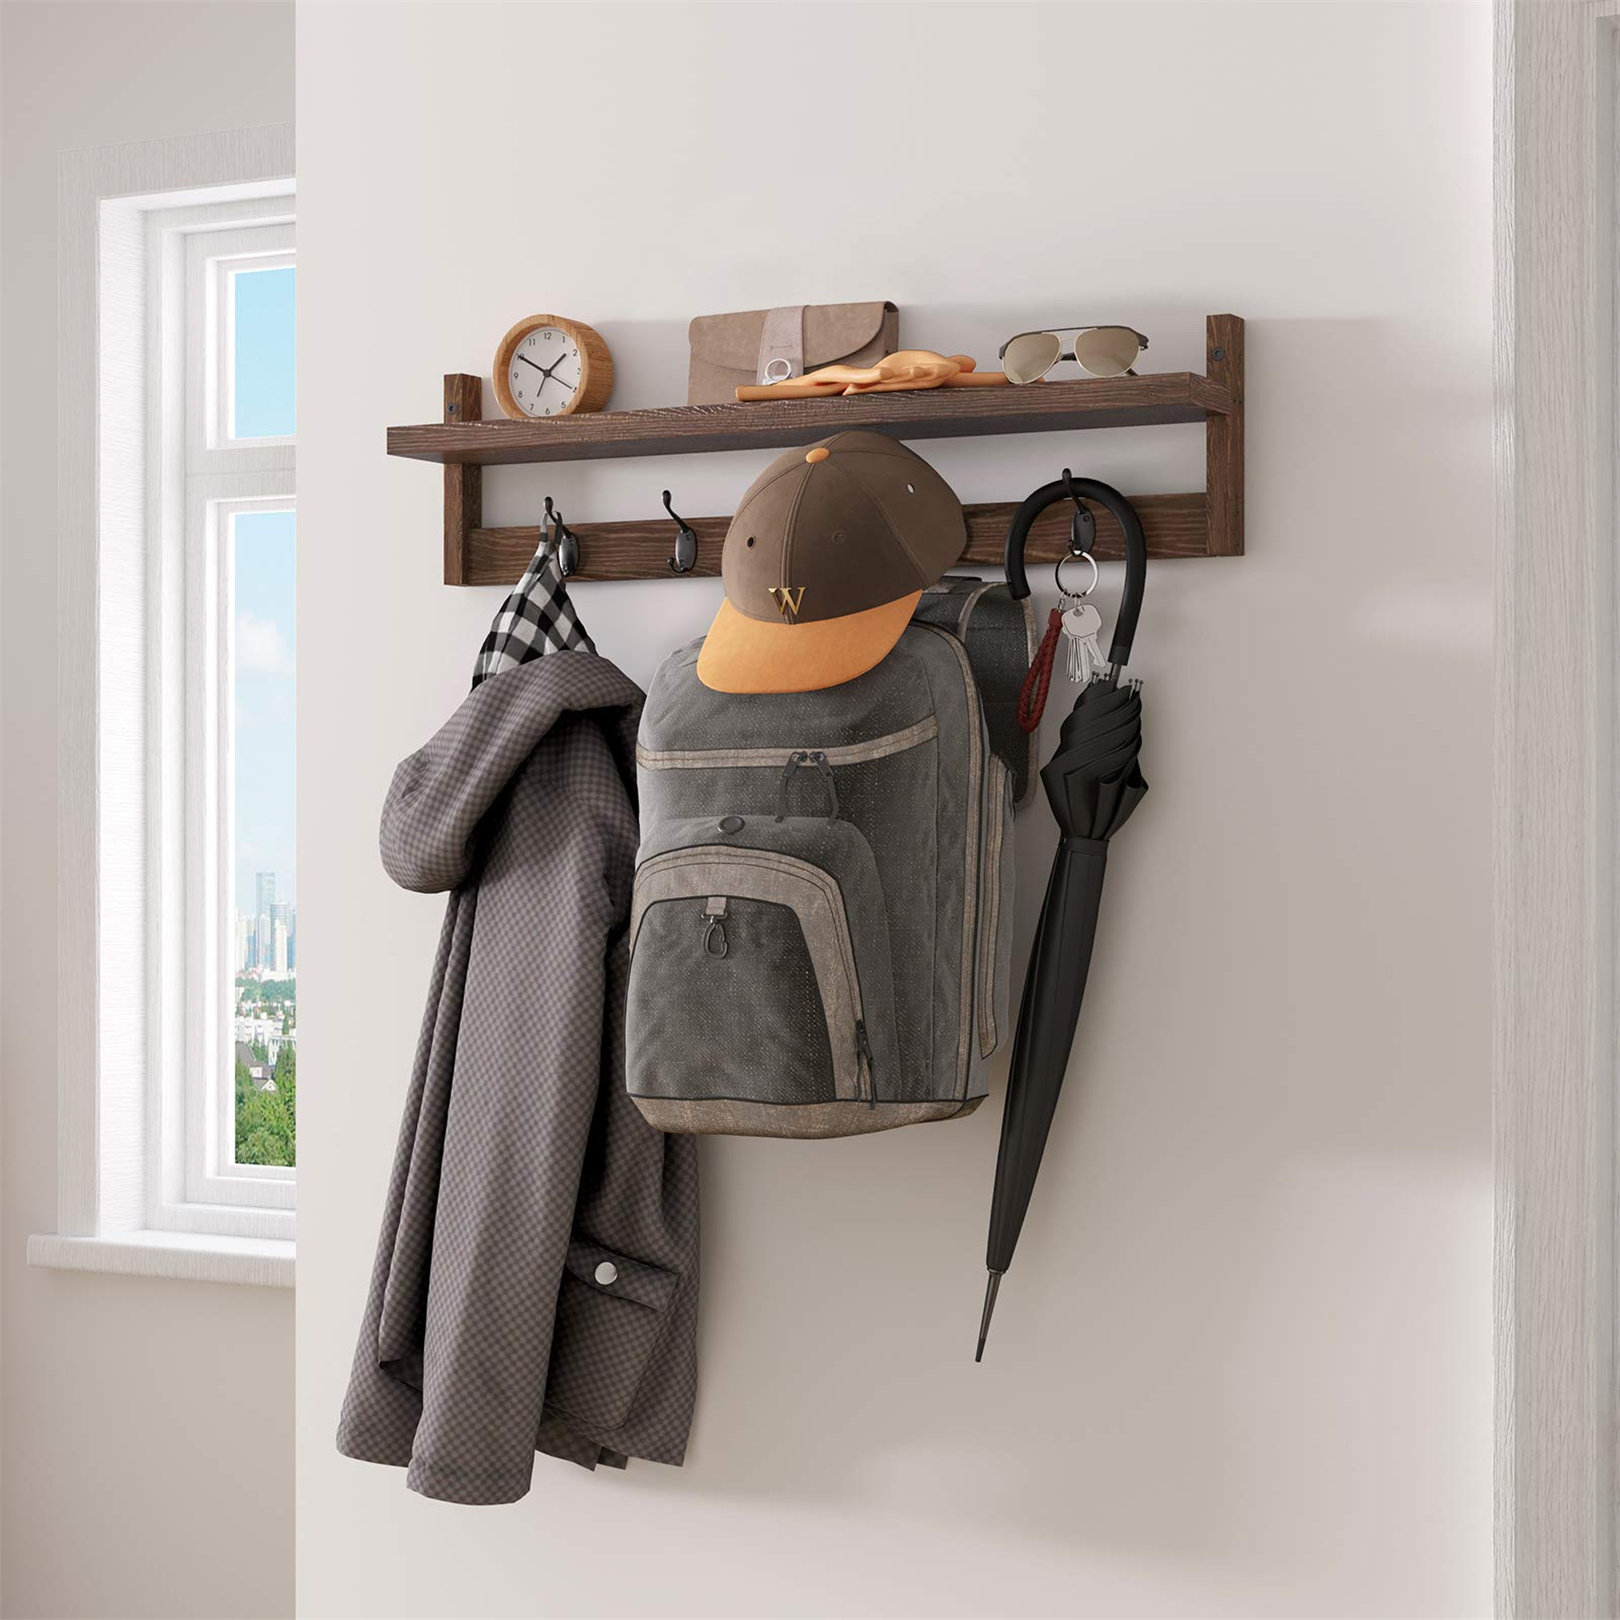 Loon Peak® Cuffy Solid Wood Wall 5 - Hook Wall Mounted Coat Rack